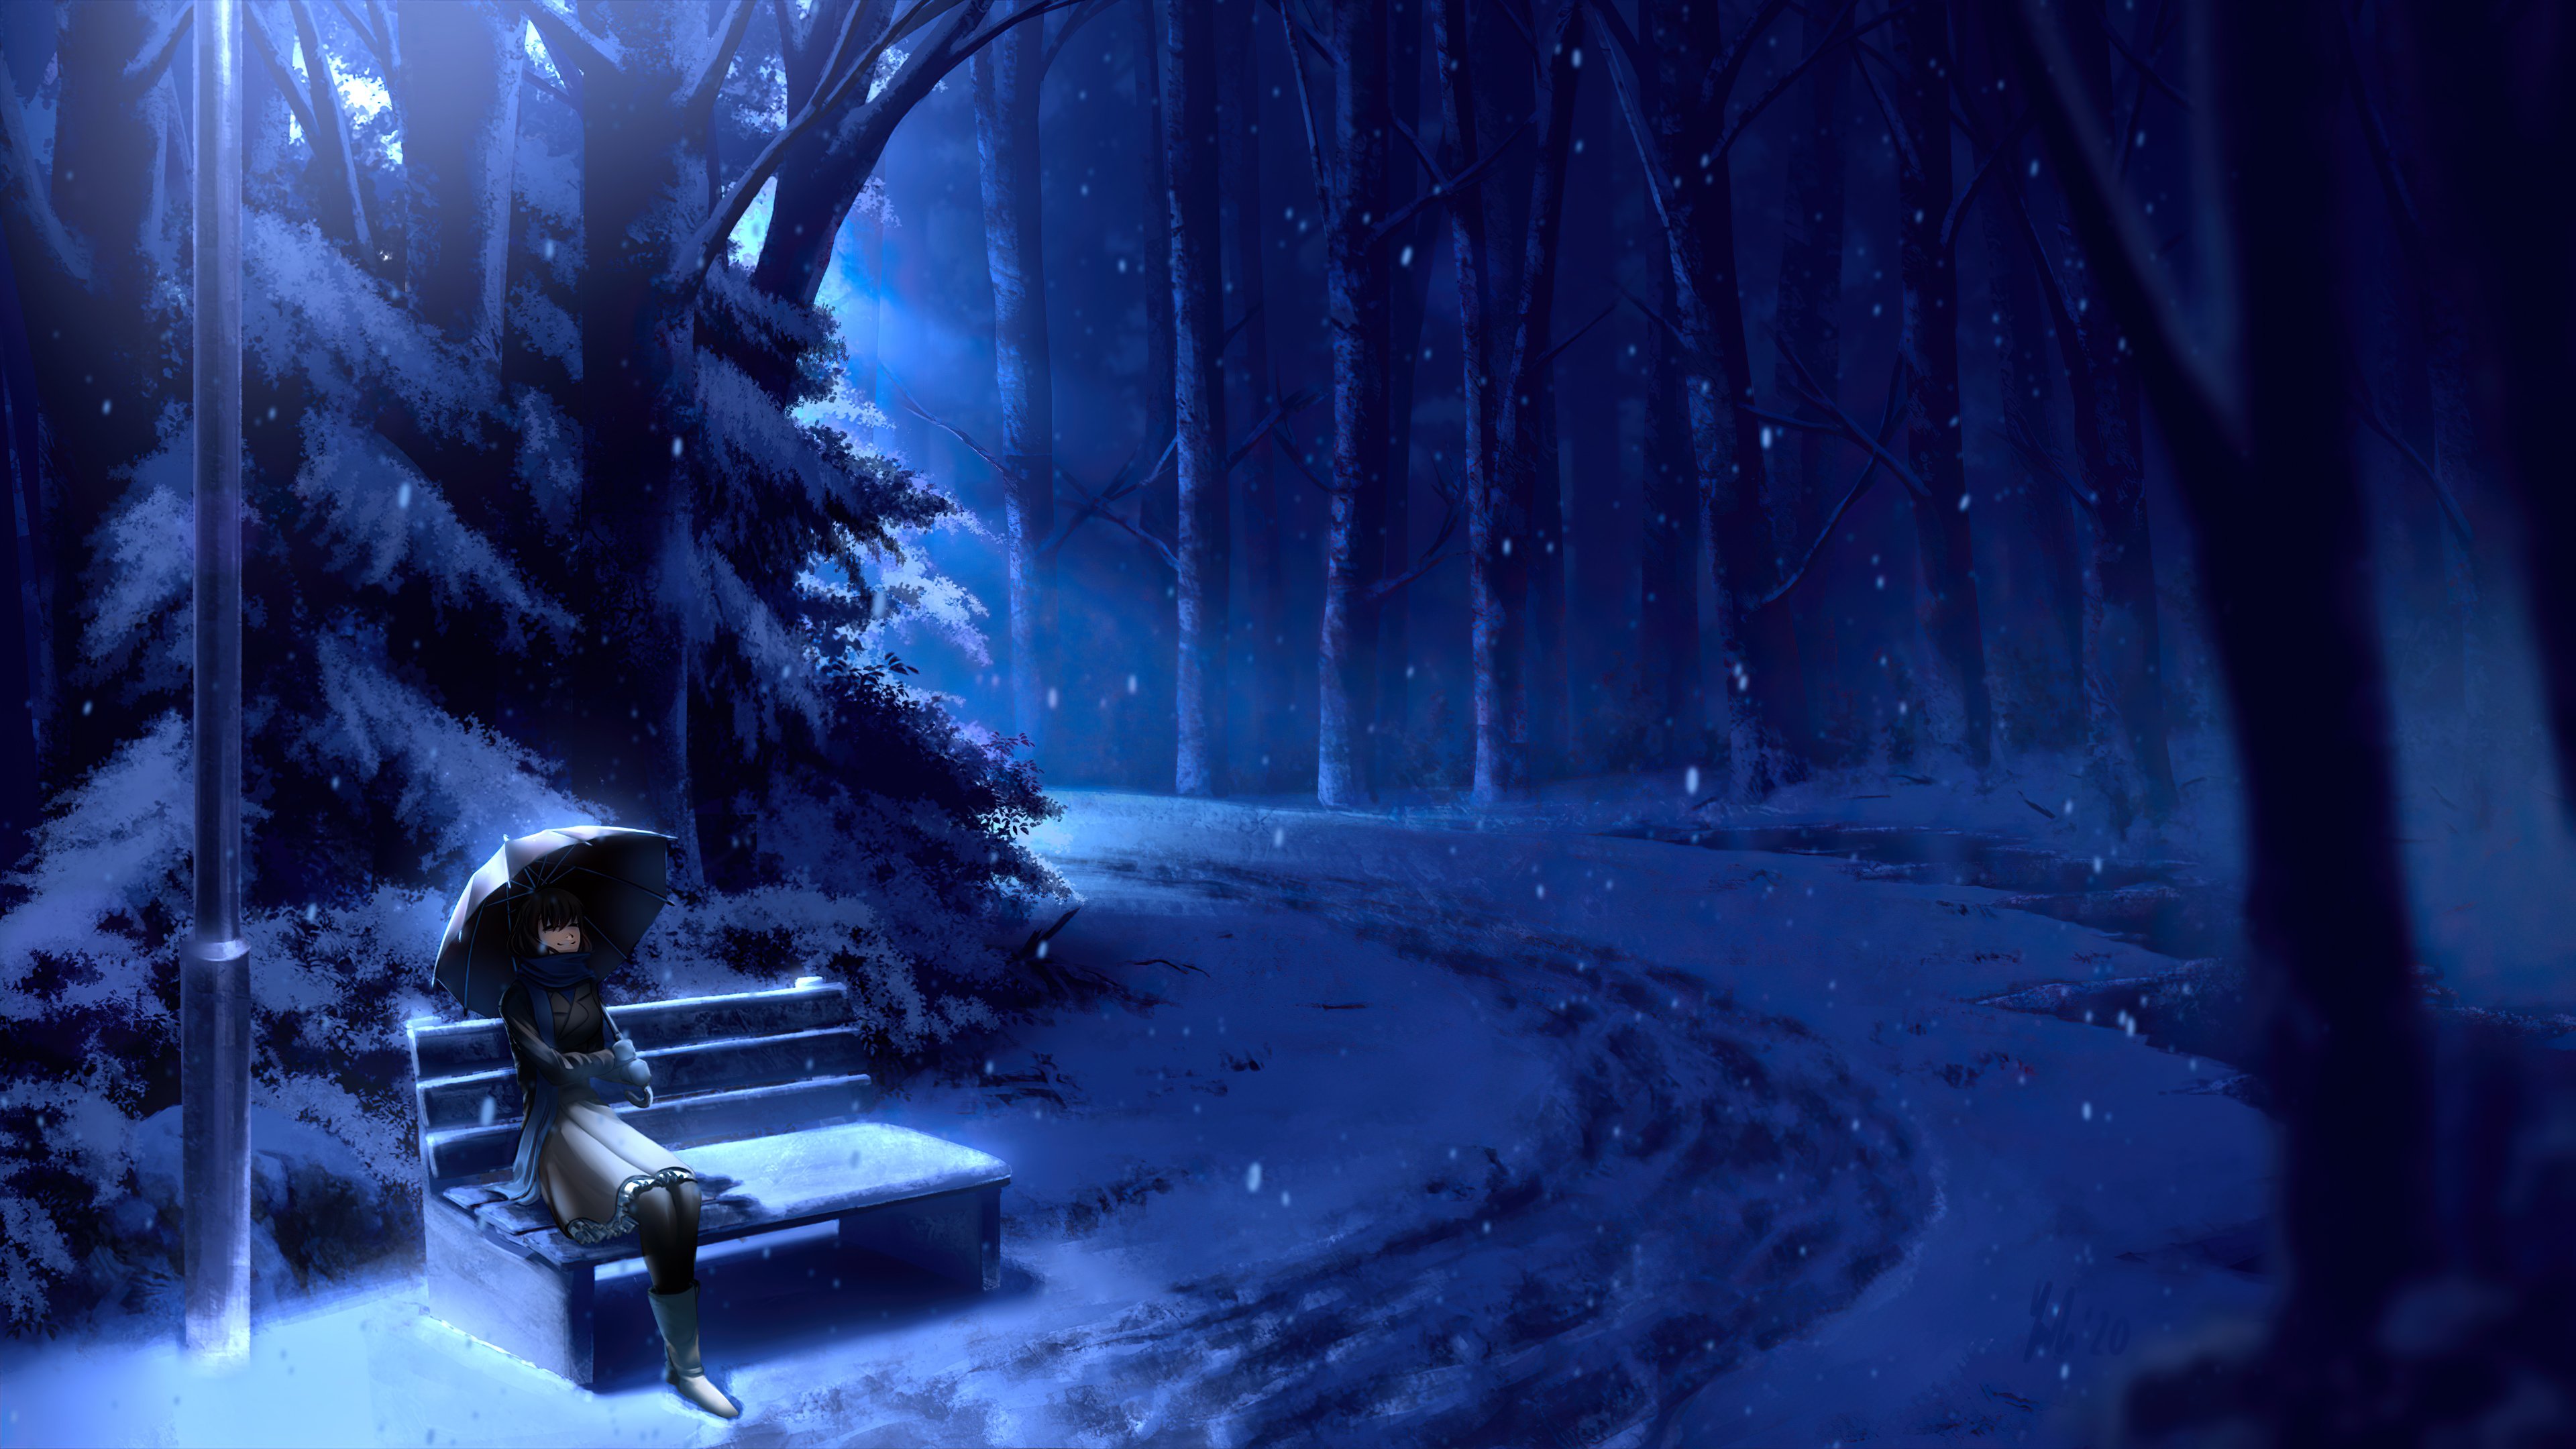 Winter Stillness 4k, HD Artist, 4k Wallpaper, Image, Background, Photo and Picture